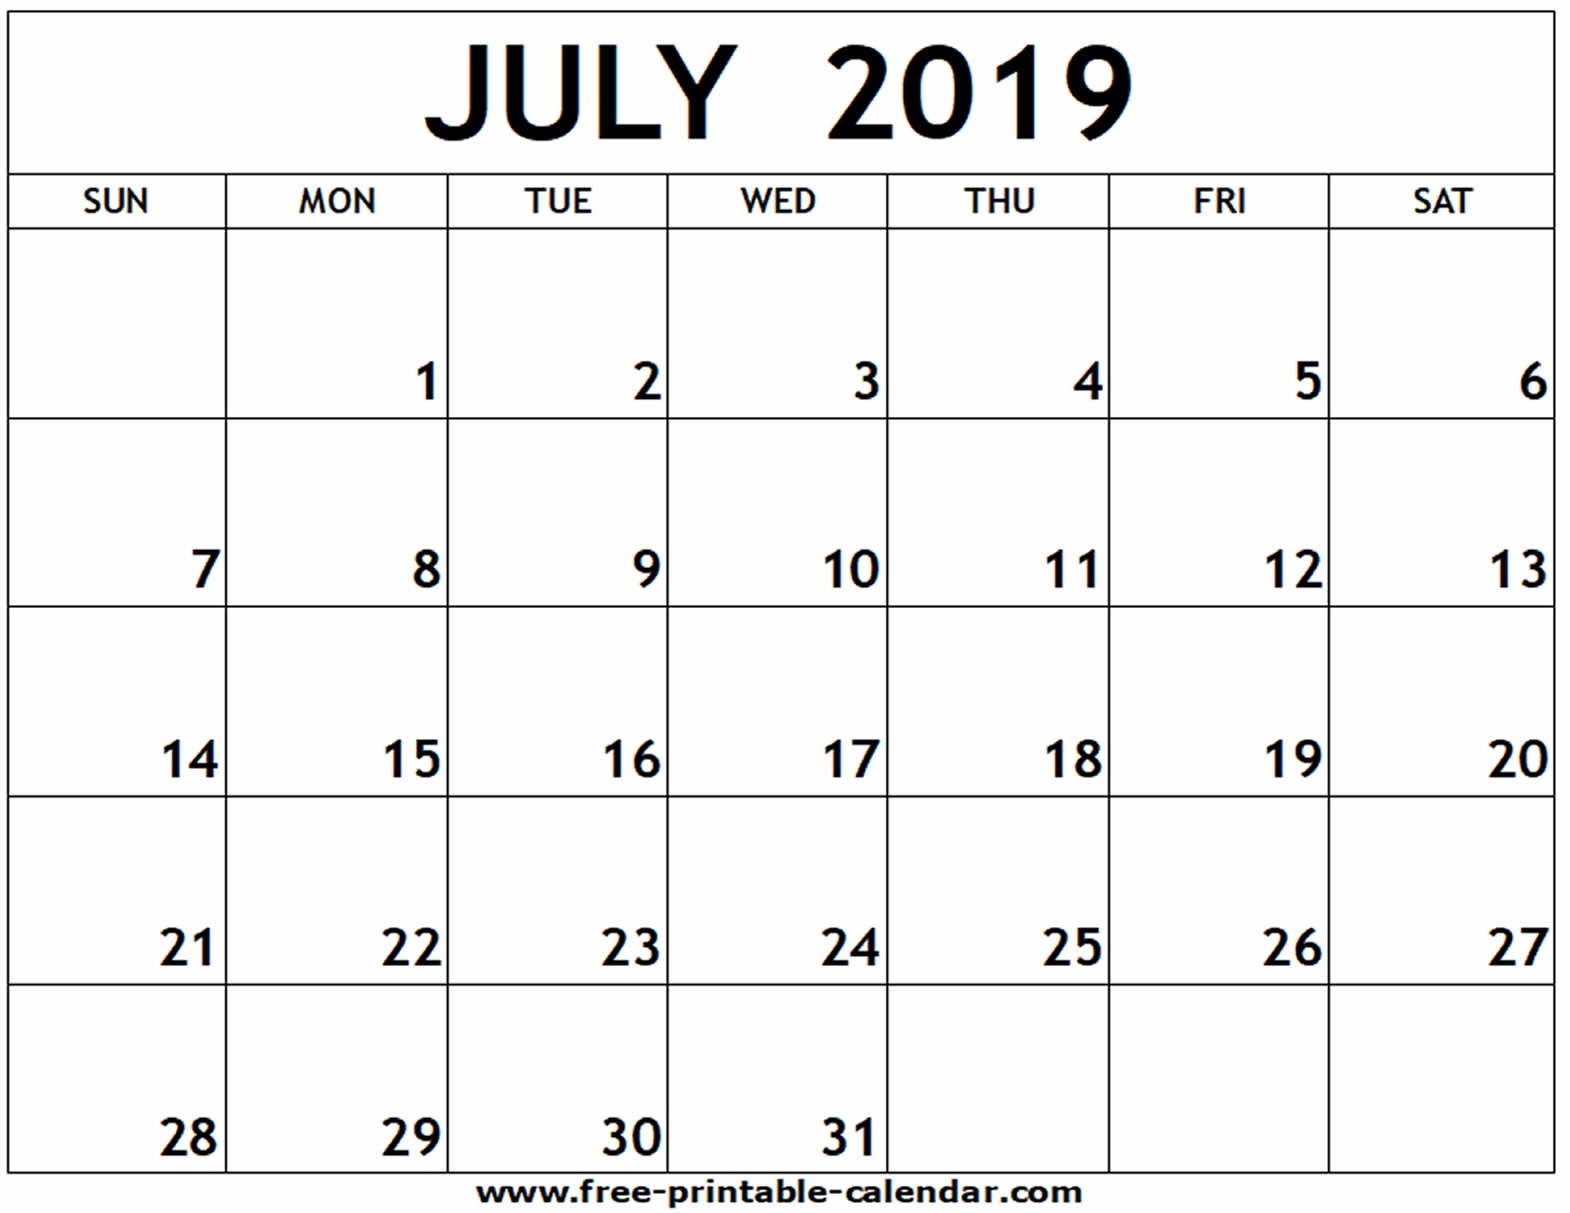 July 2019 Printable Calendar - Free-Printable-Calendar Dashing Blank Calendar July 17